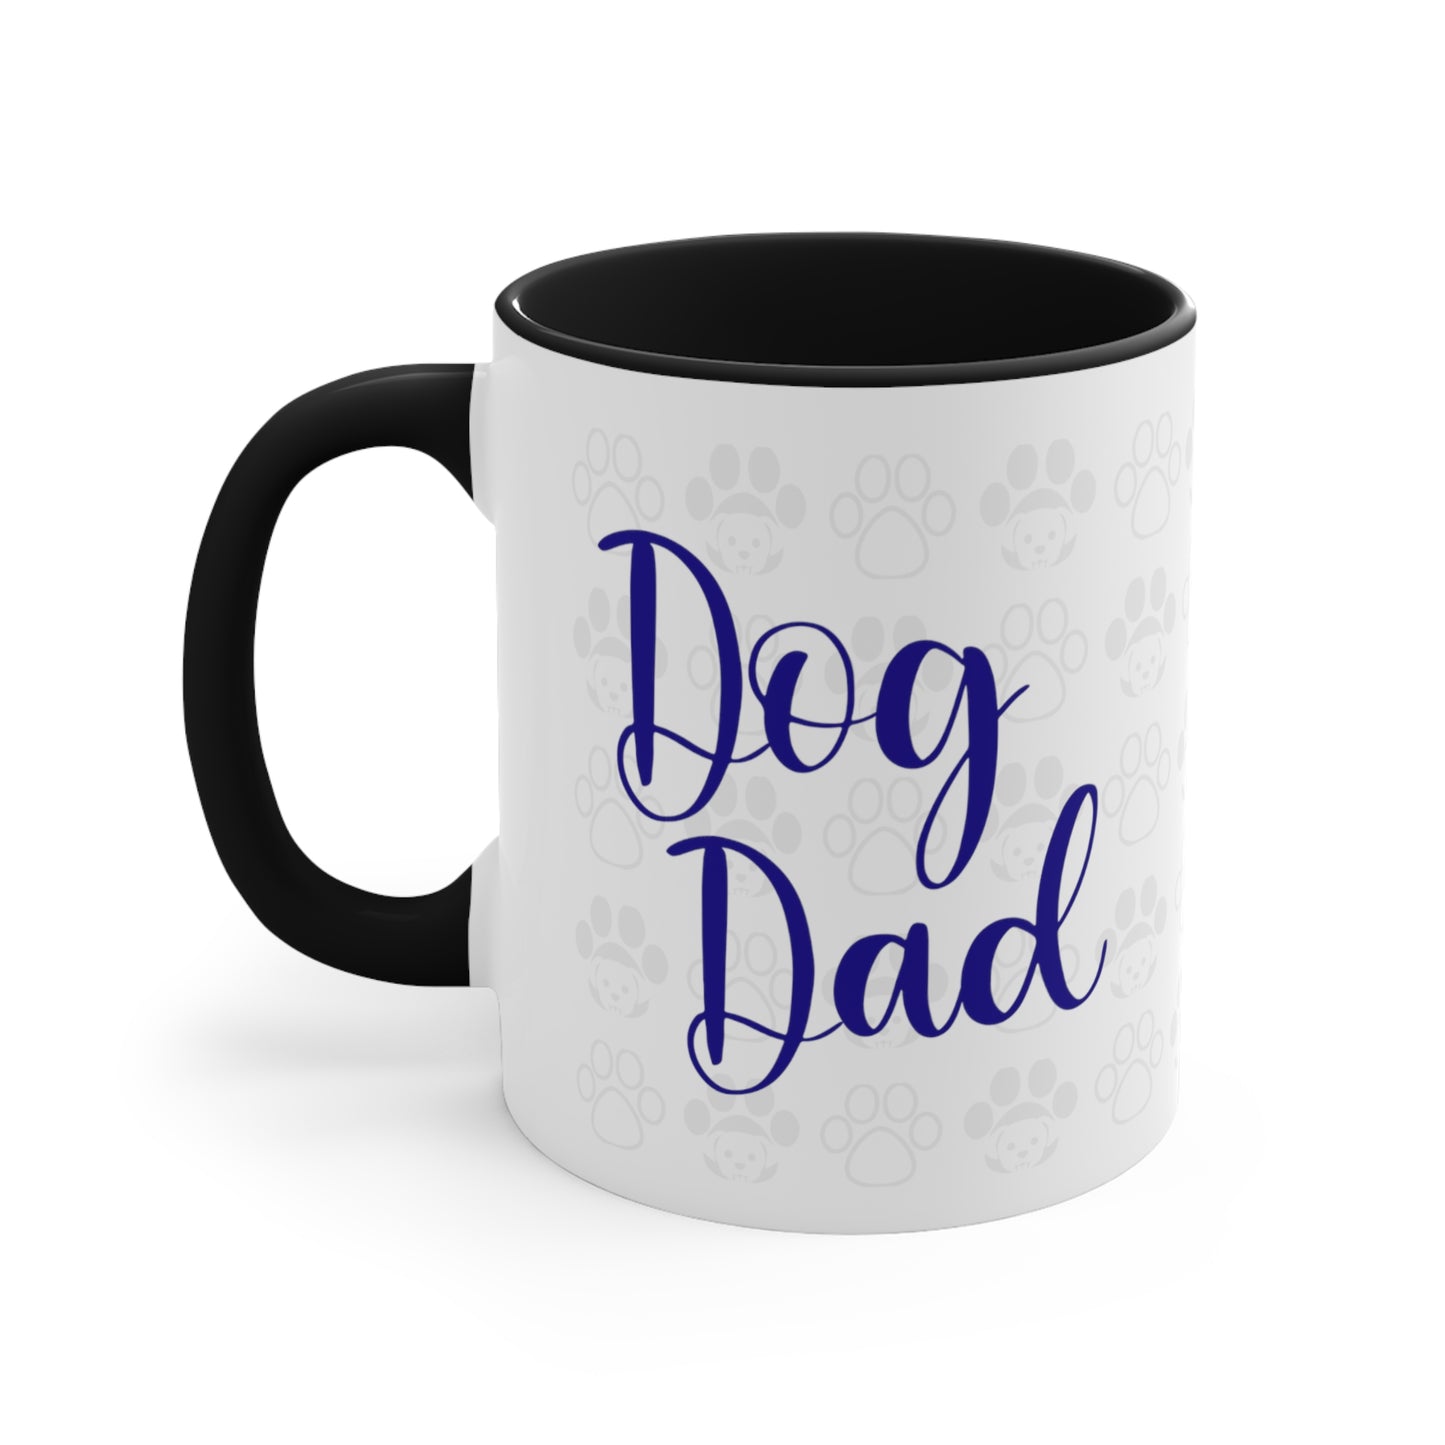 Dog Dad coffee Mug 11 oz, front view in black.